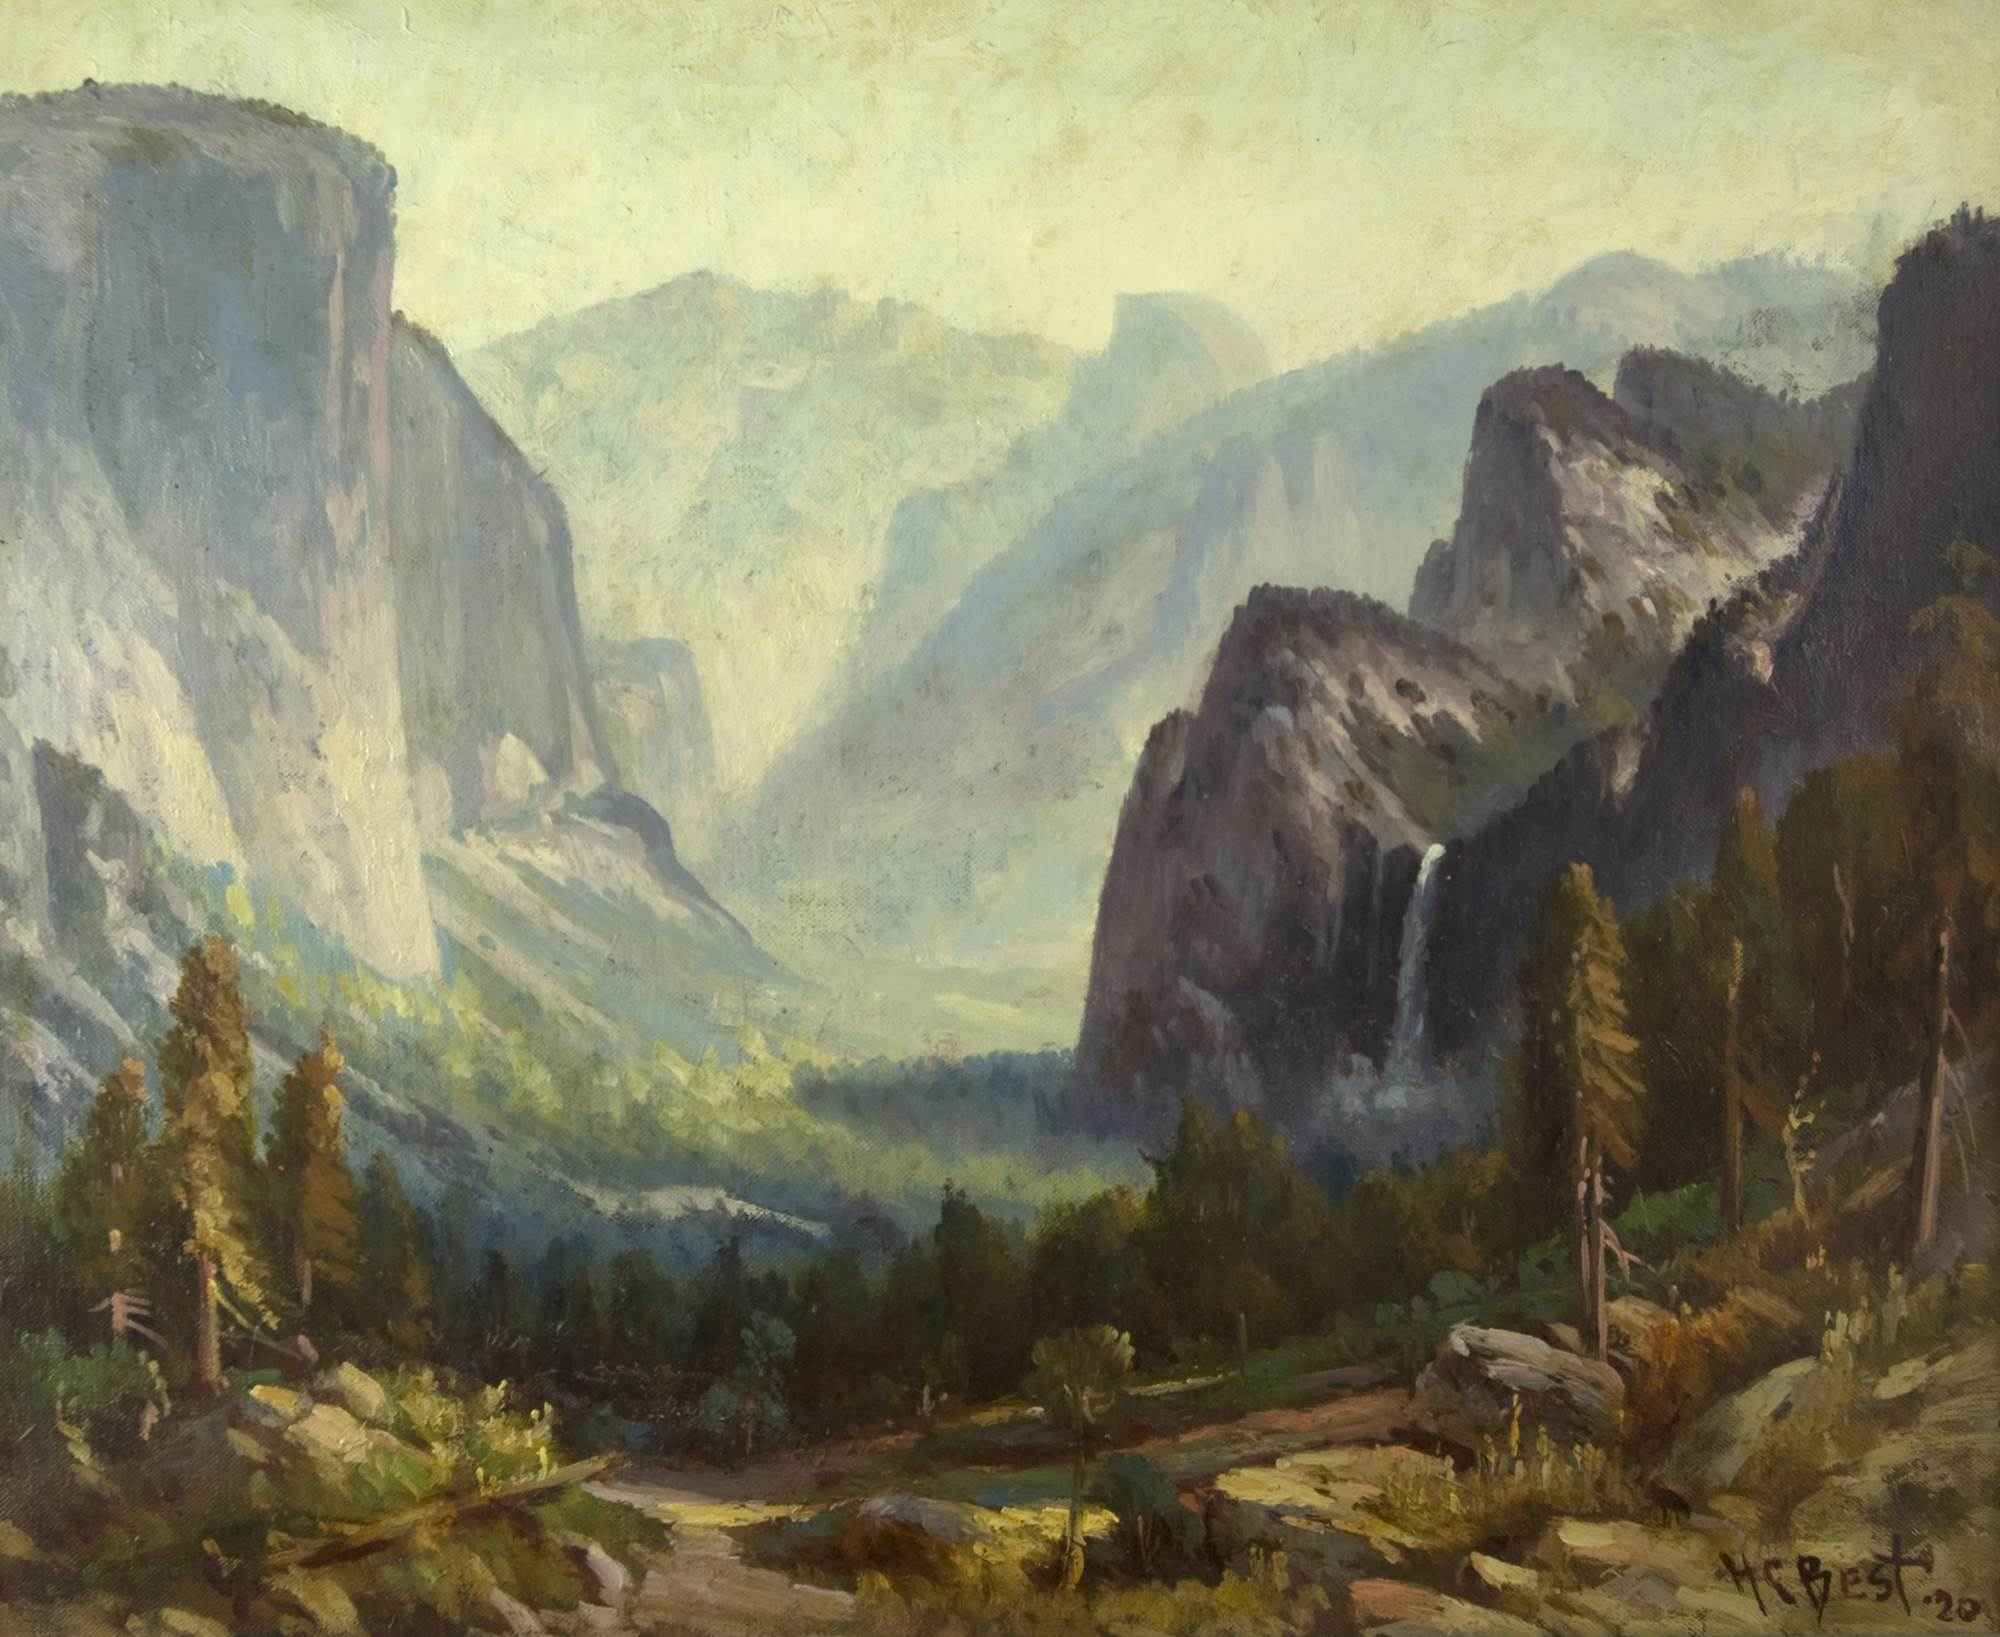 Painting Yosemite Valley